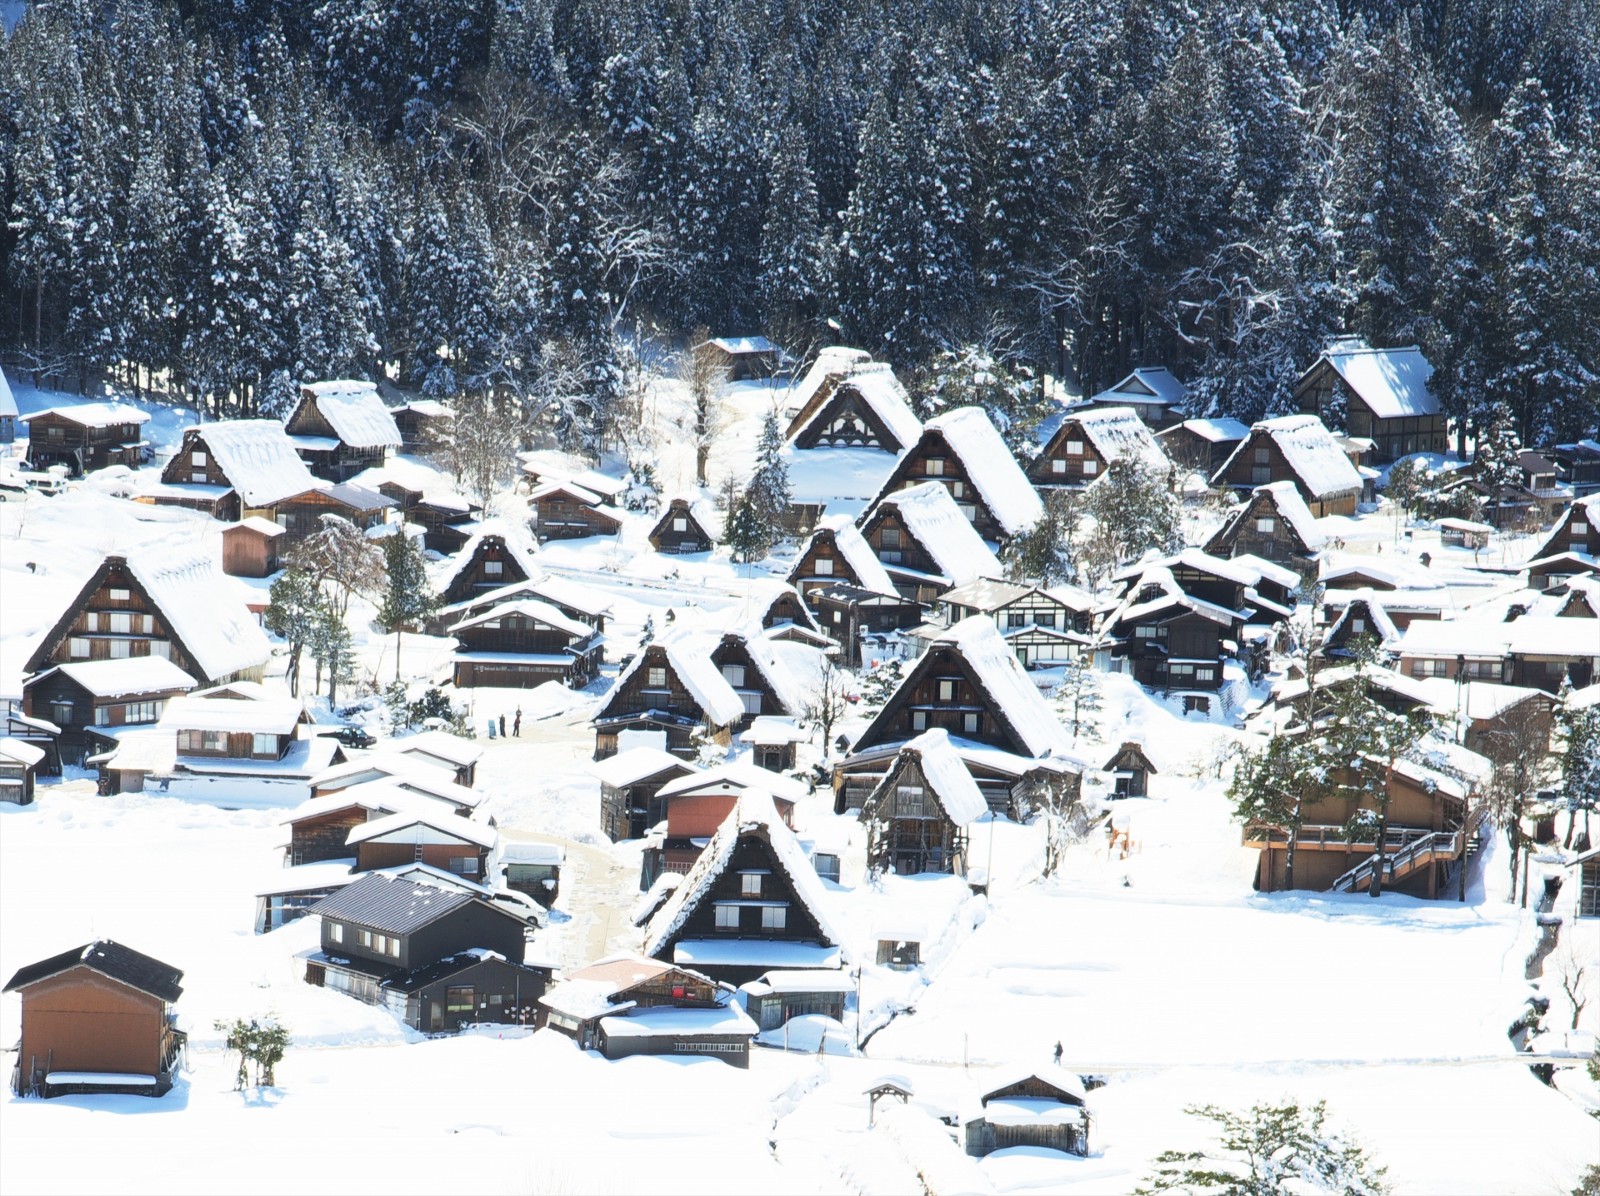 The picturesque scenery of SHirakawago Village in winter